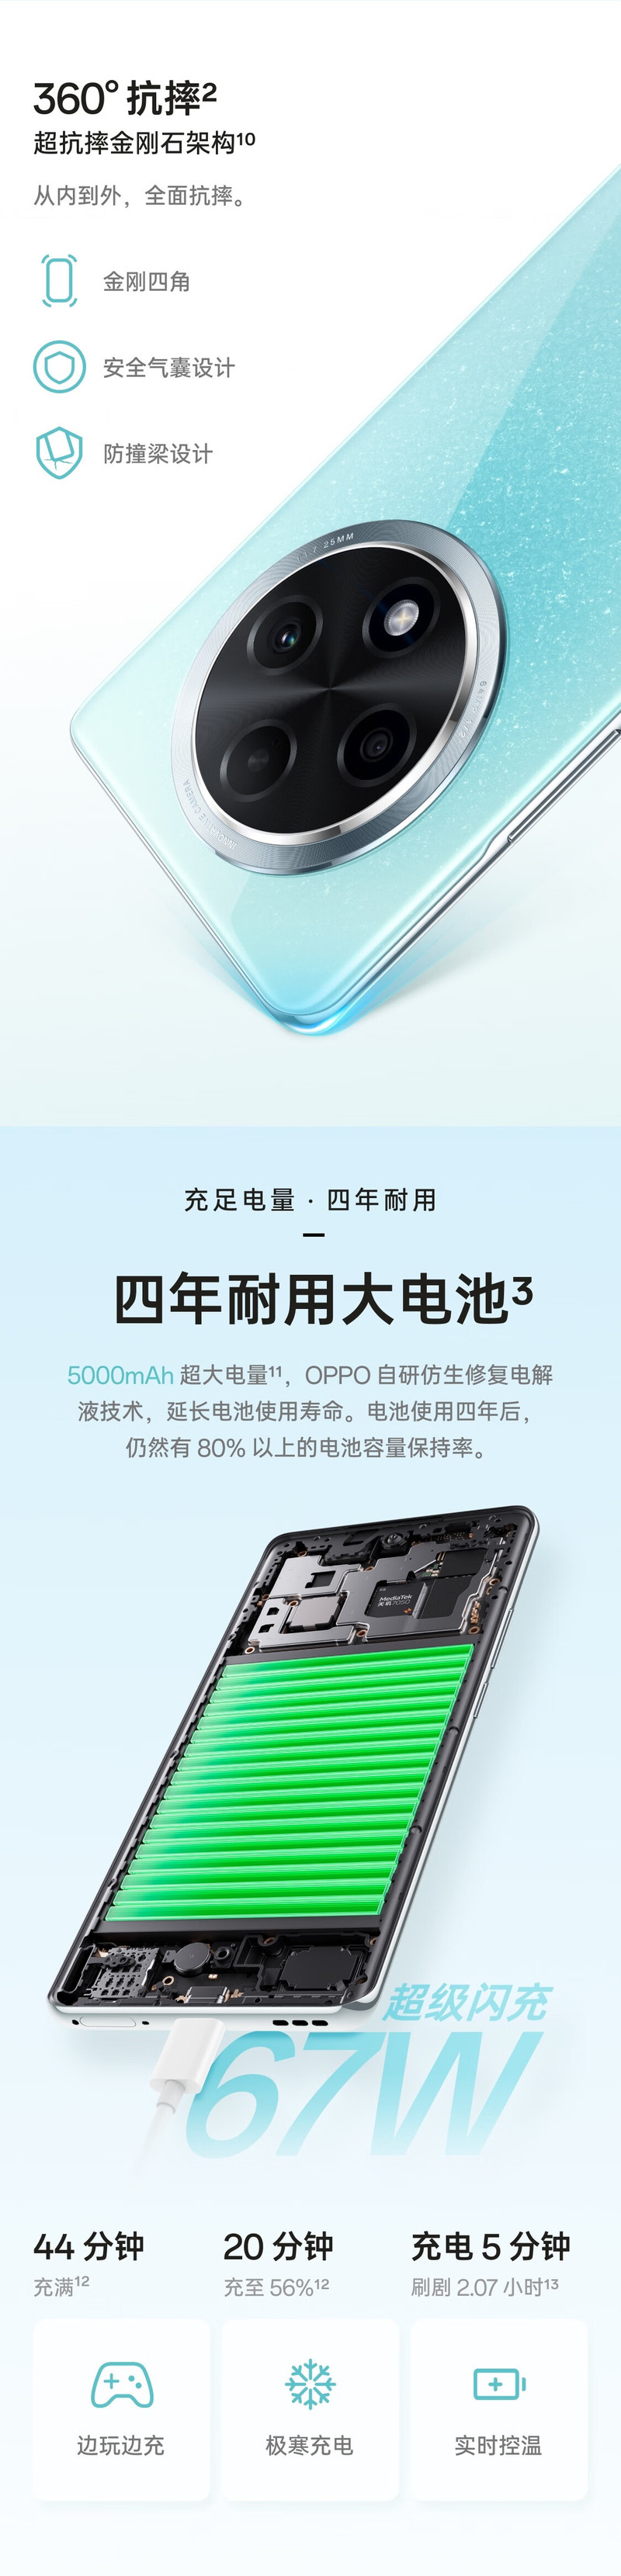 OPPO A3 Pro 满级防水 抗摔护眼屏 AI手机